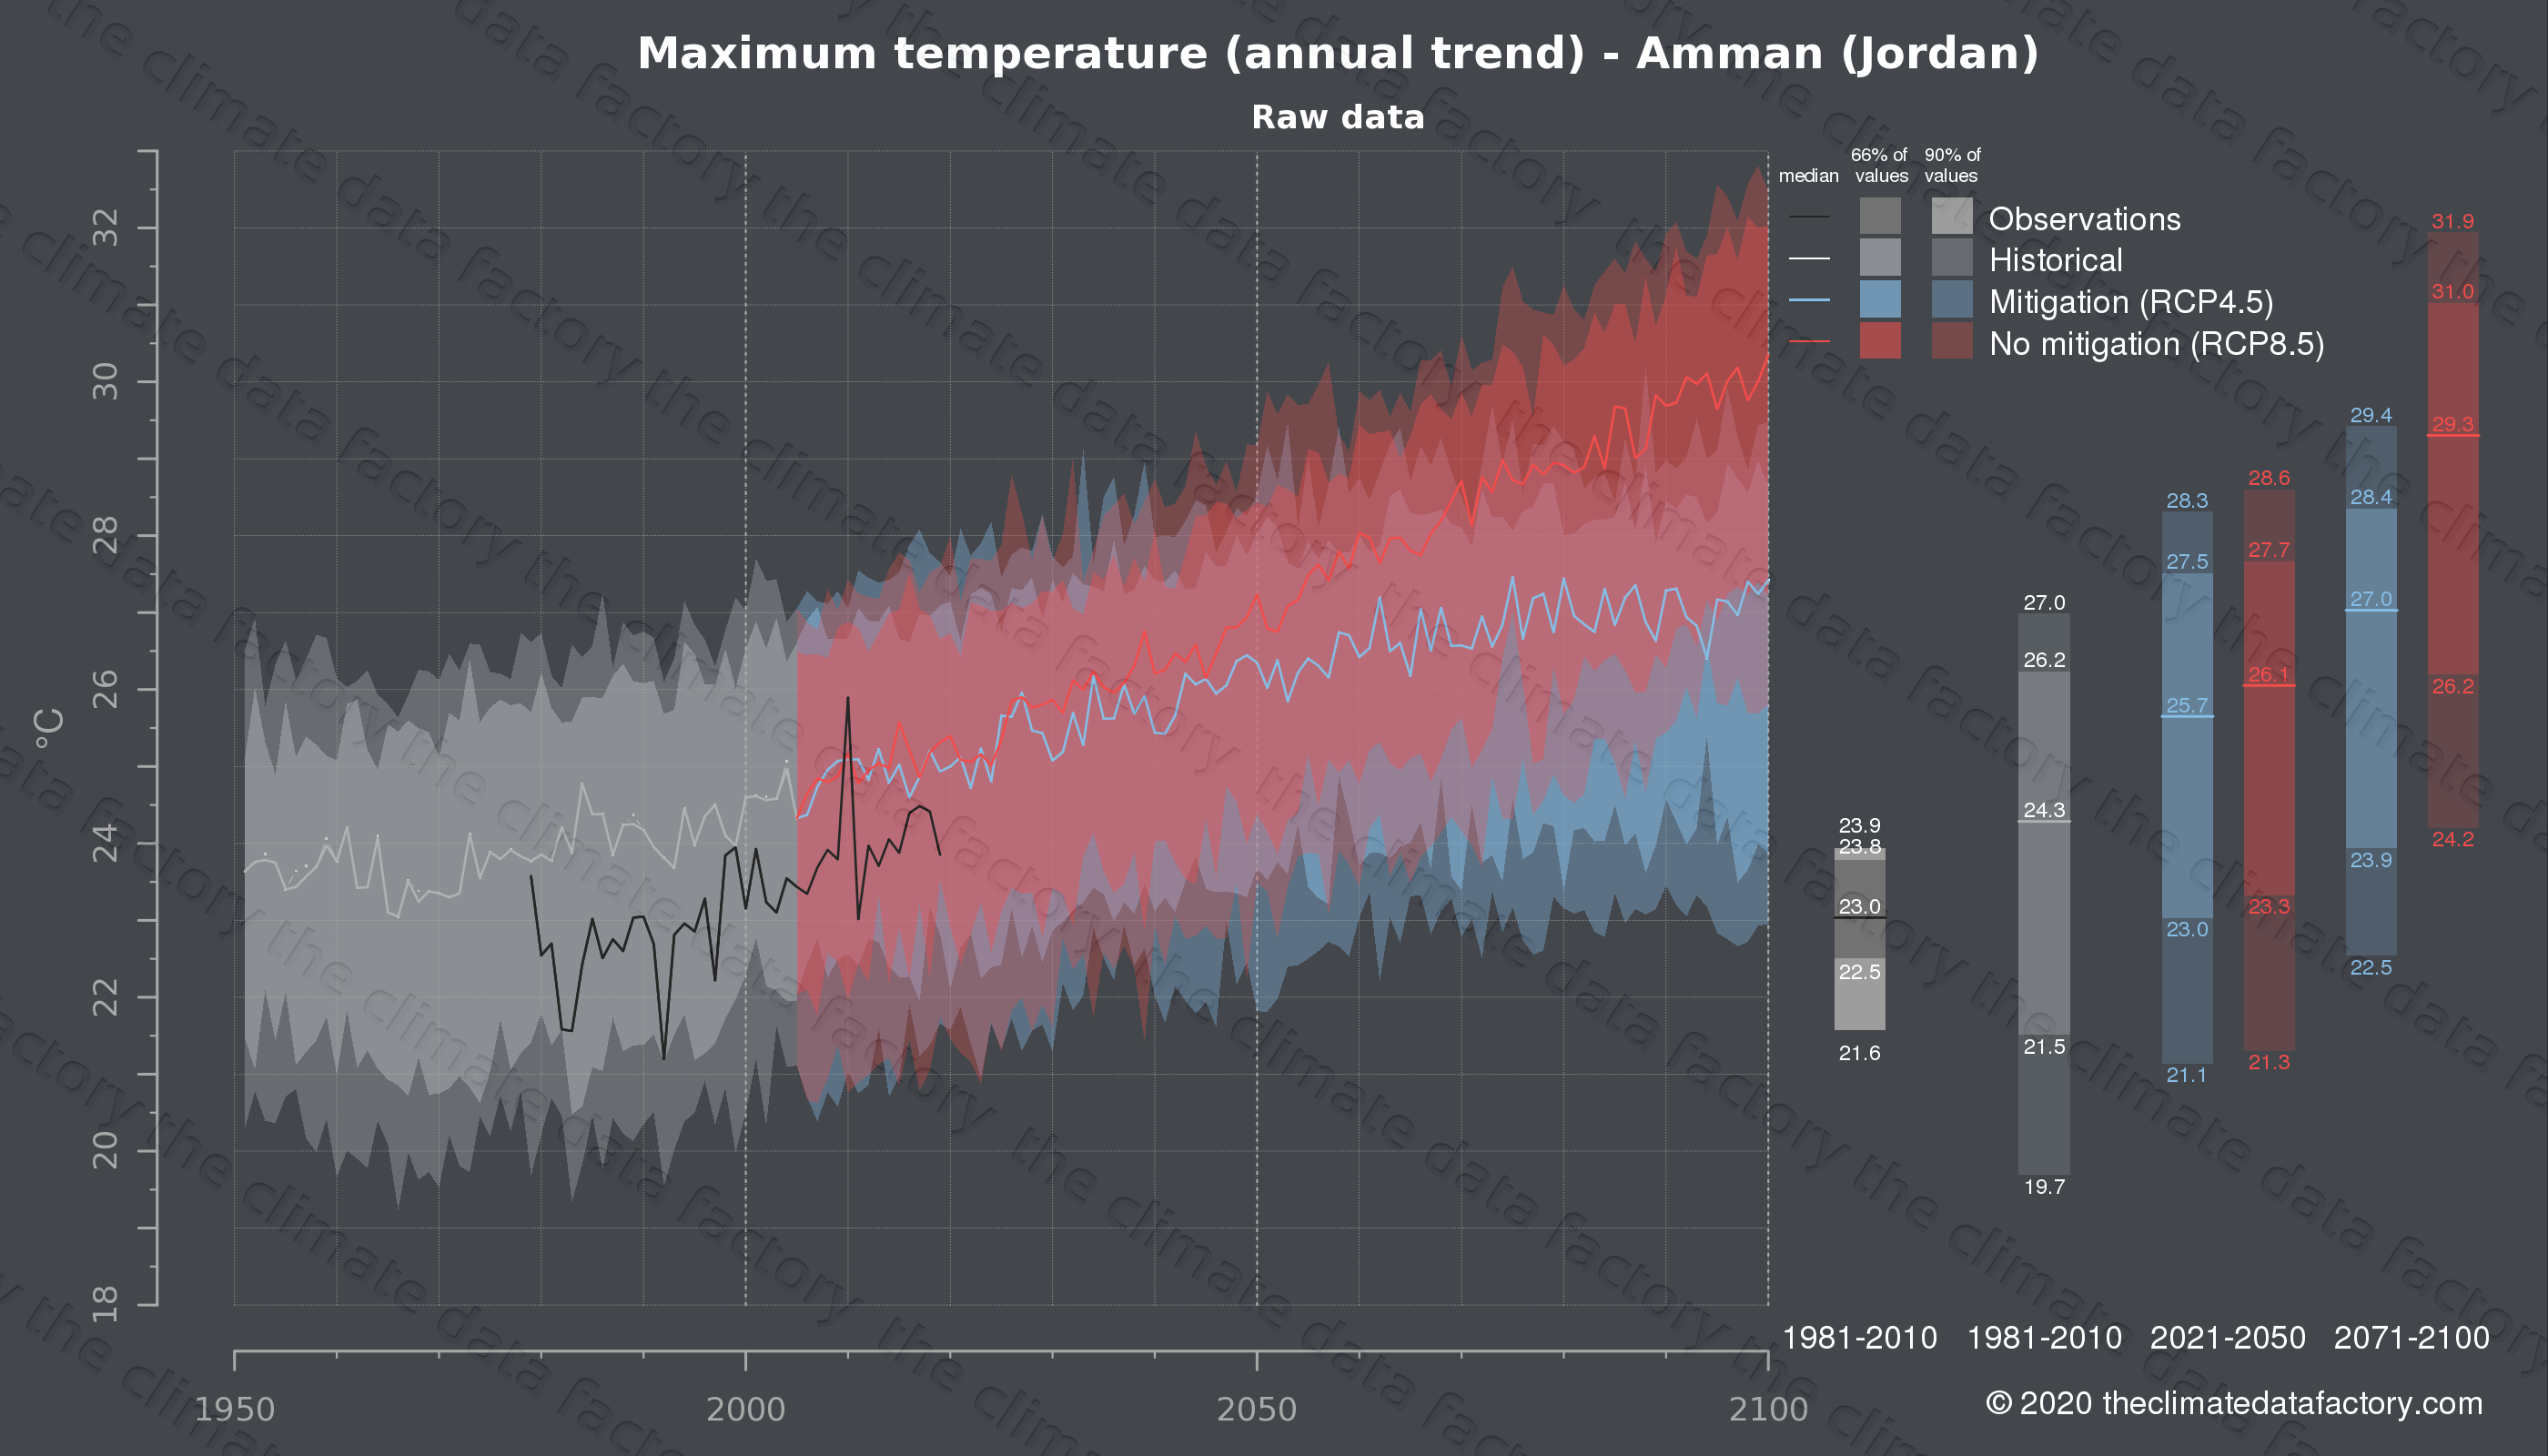 Efternavn farligt succes Maximum temperature over Amman | Climate change data download